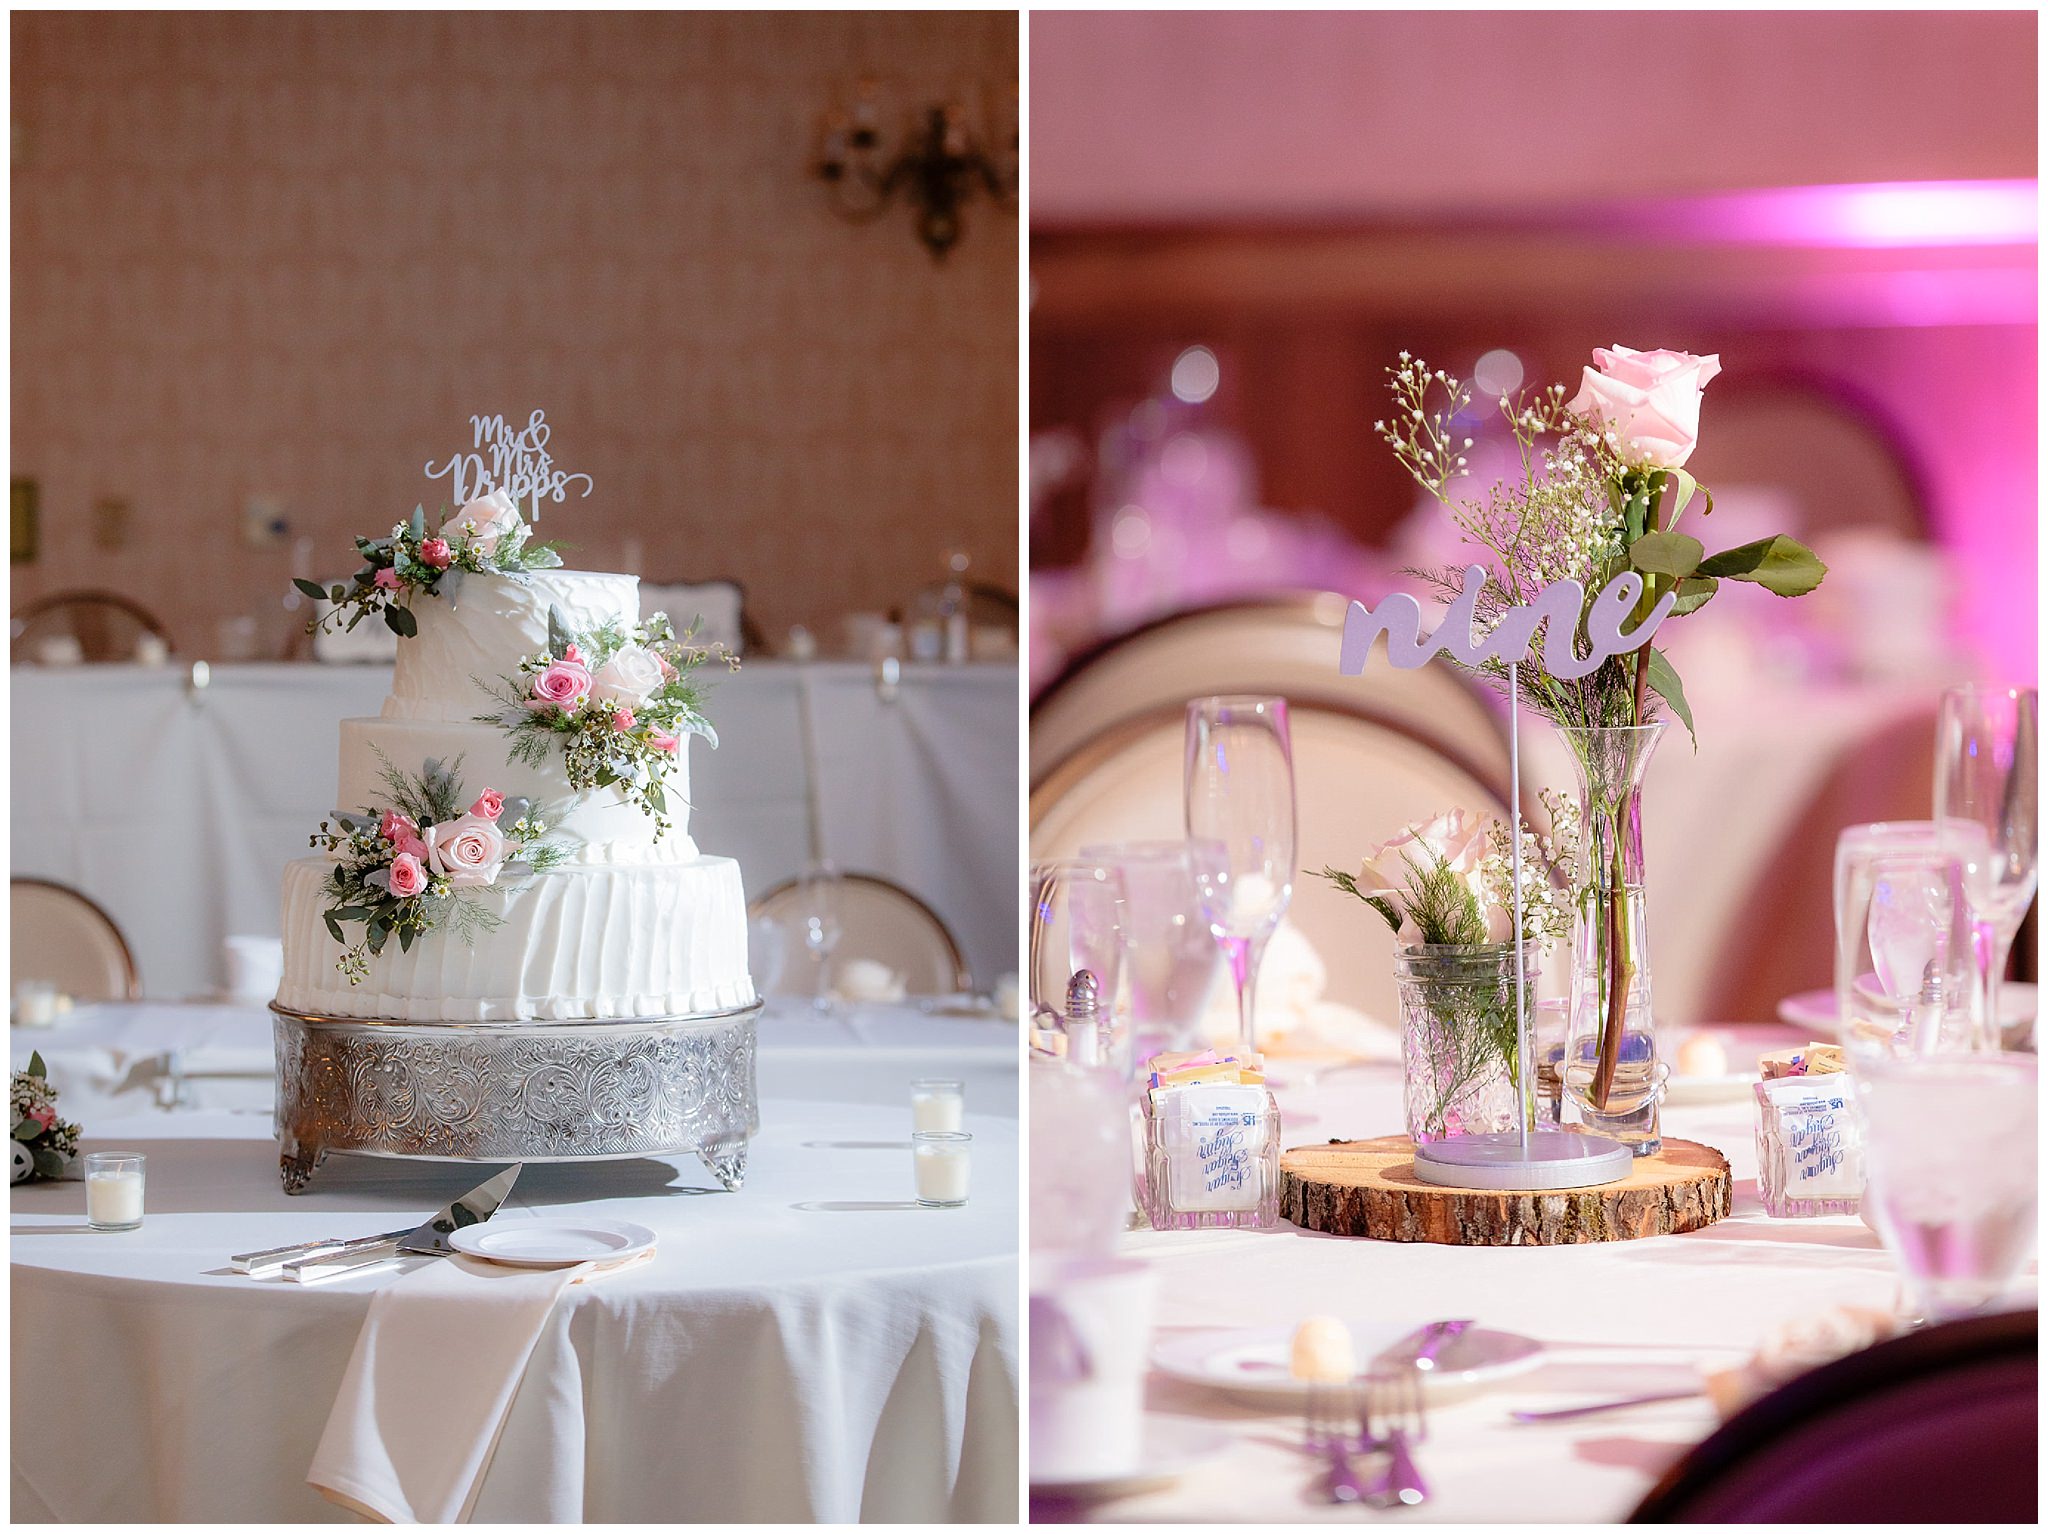 Wedding cake & floral centerpieces at an Oglebay wedding reception